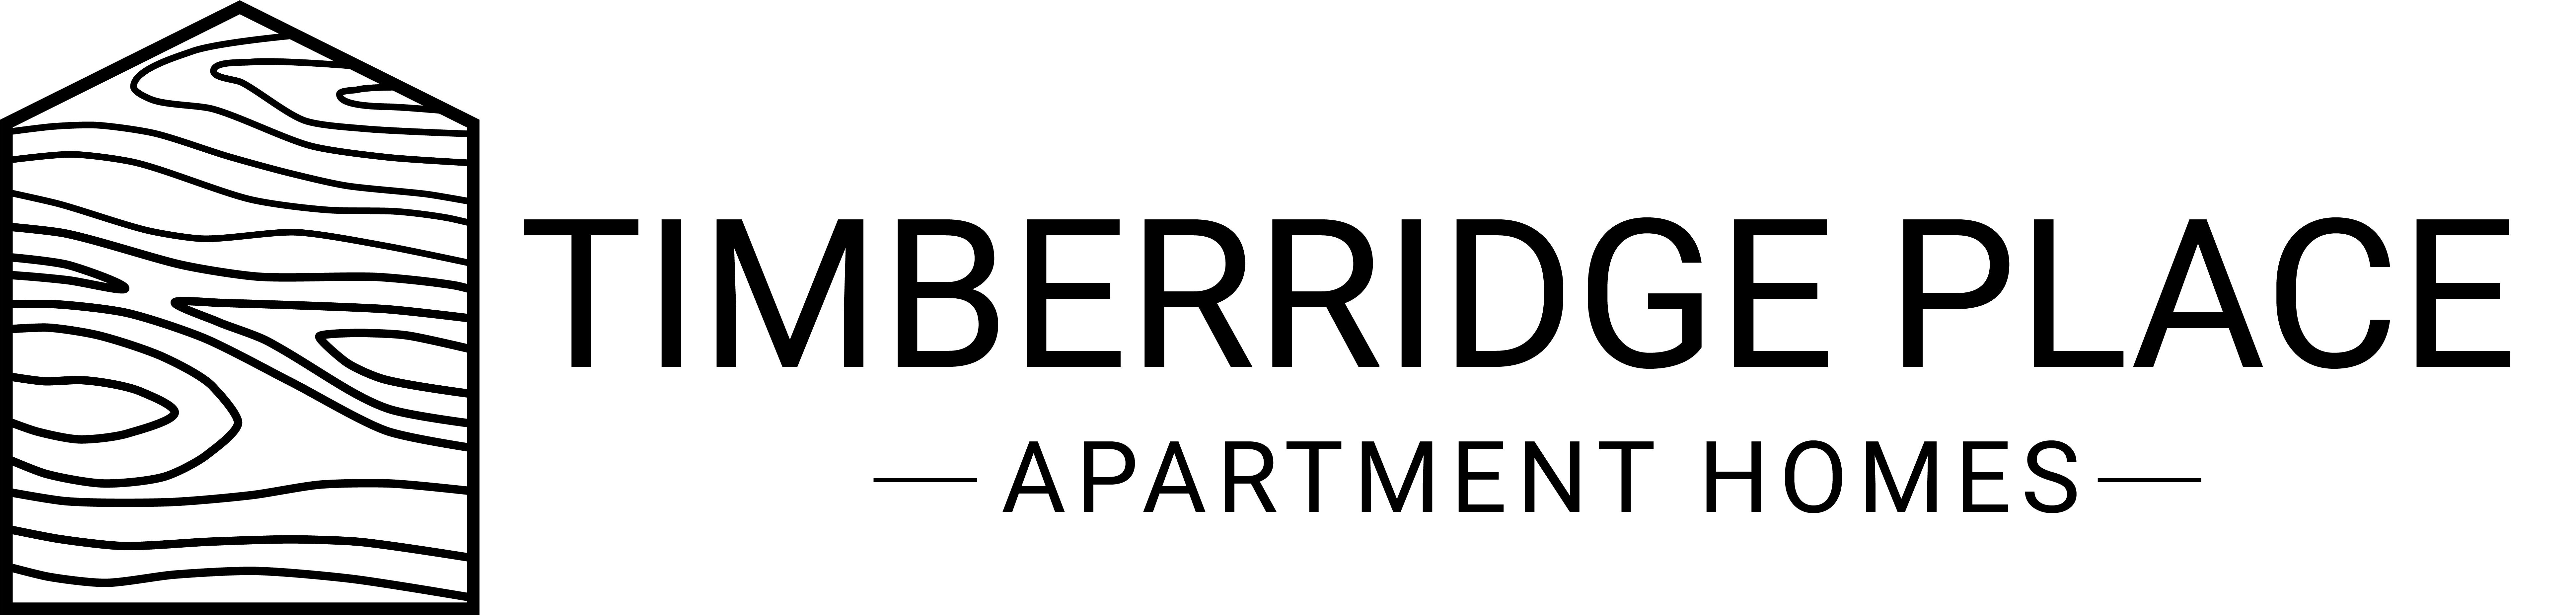 Timberridge Place Apartment Homes